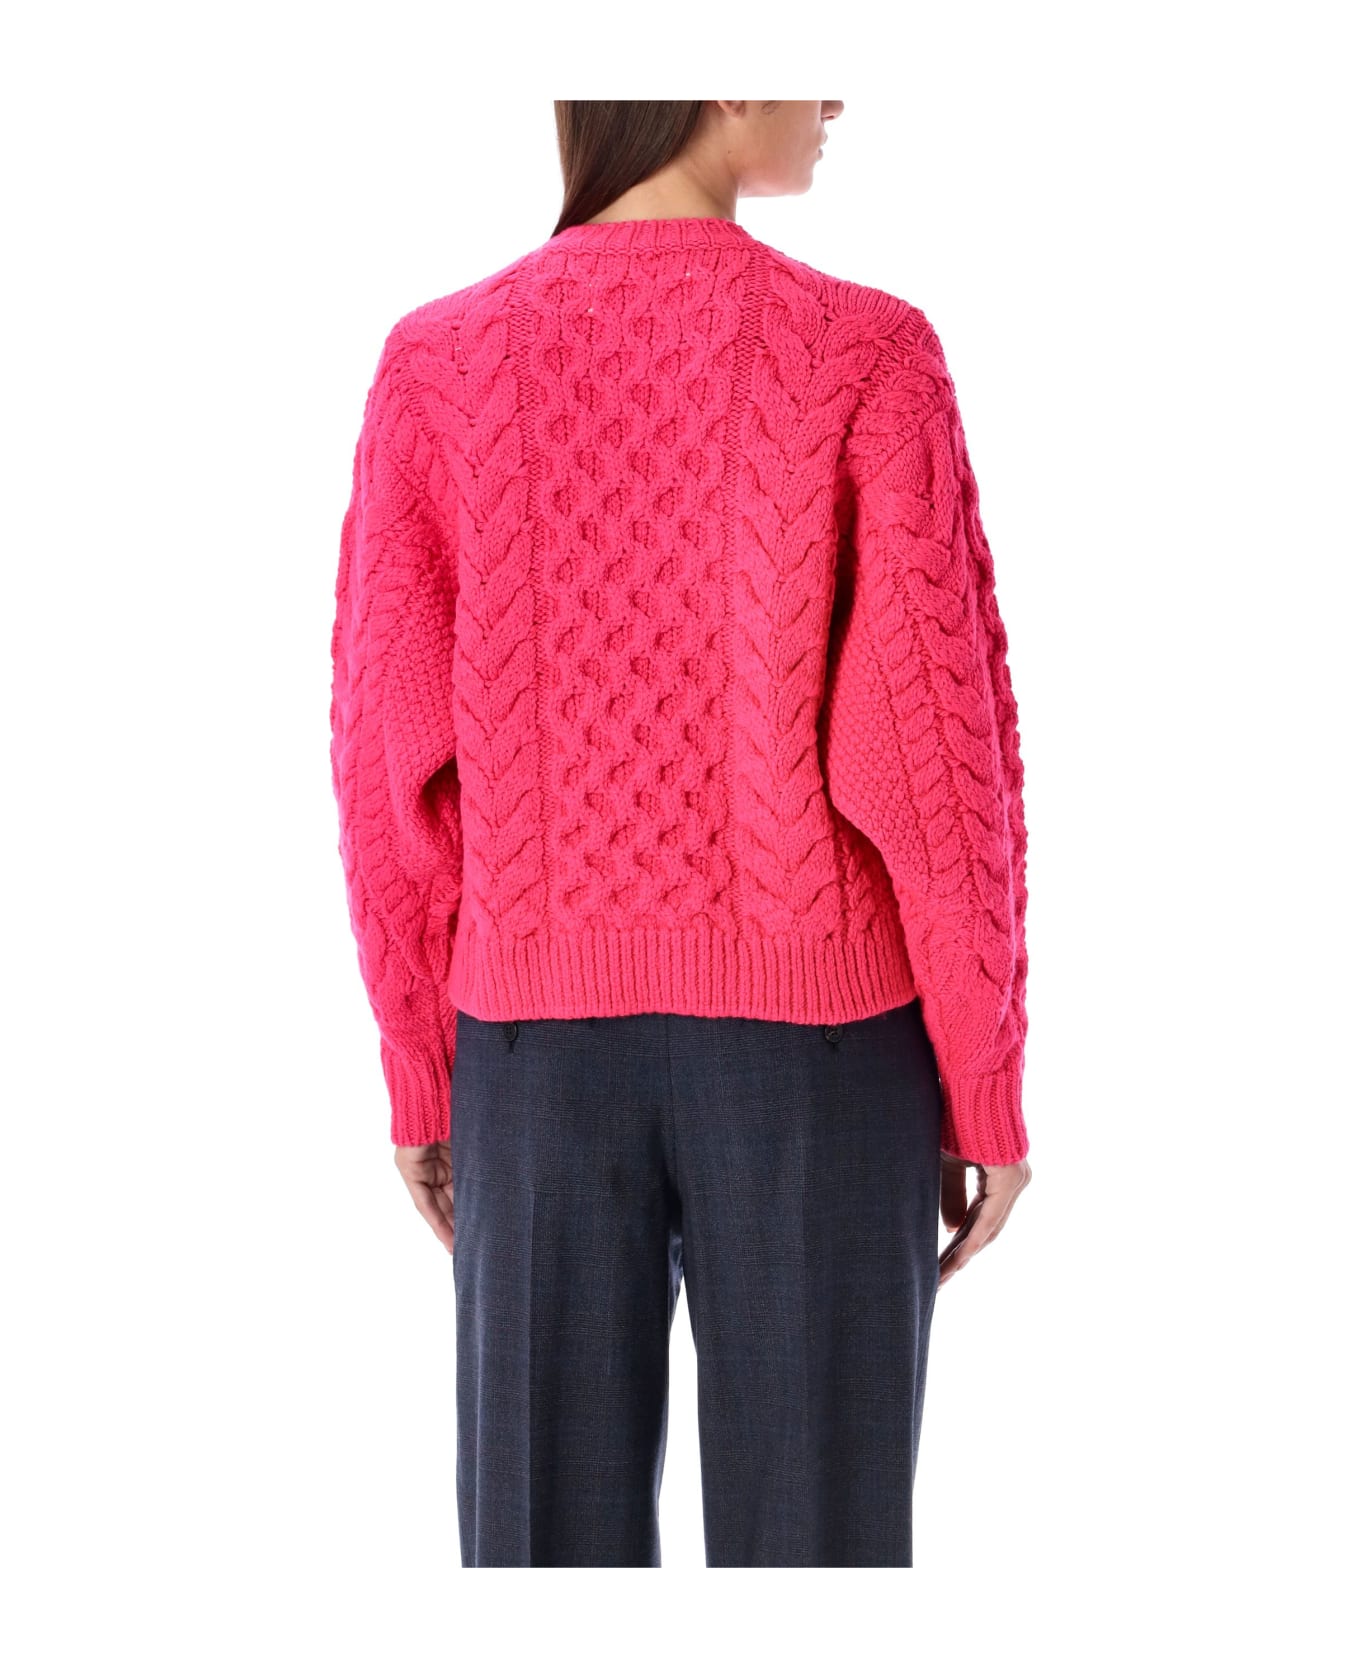 Marant Étoile Jake Knit Sweater - FUCSIA